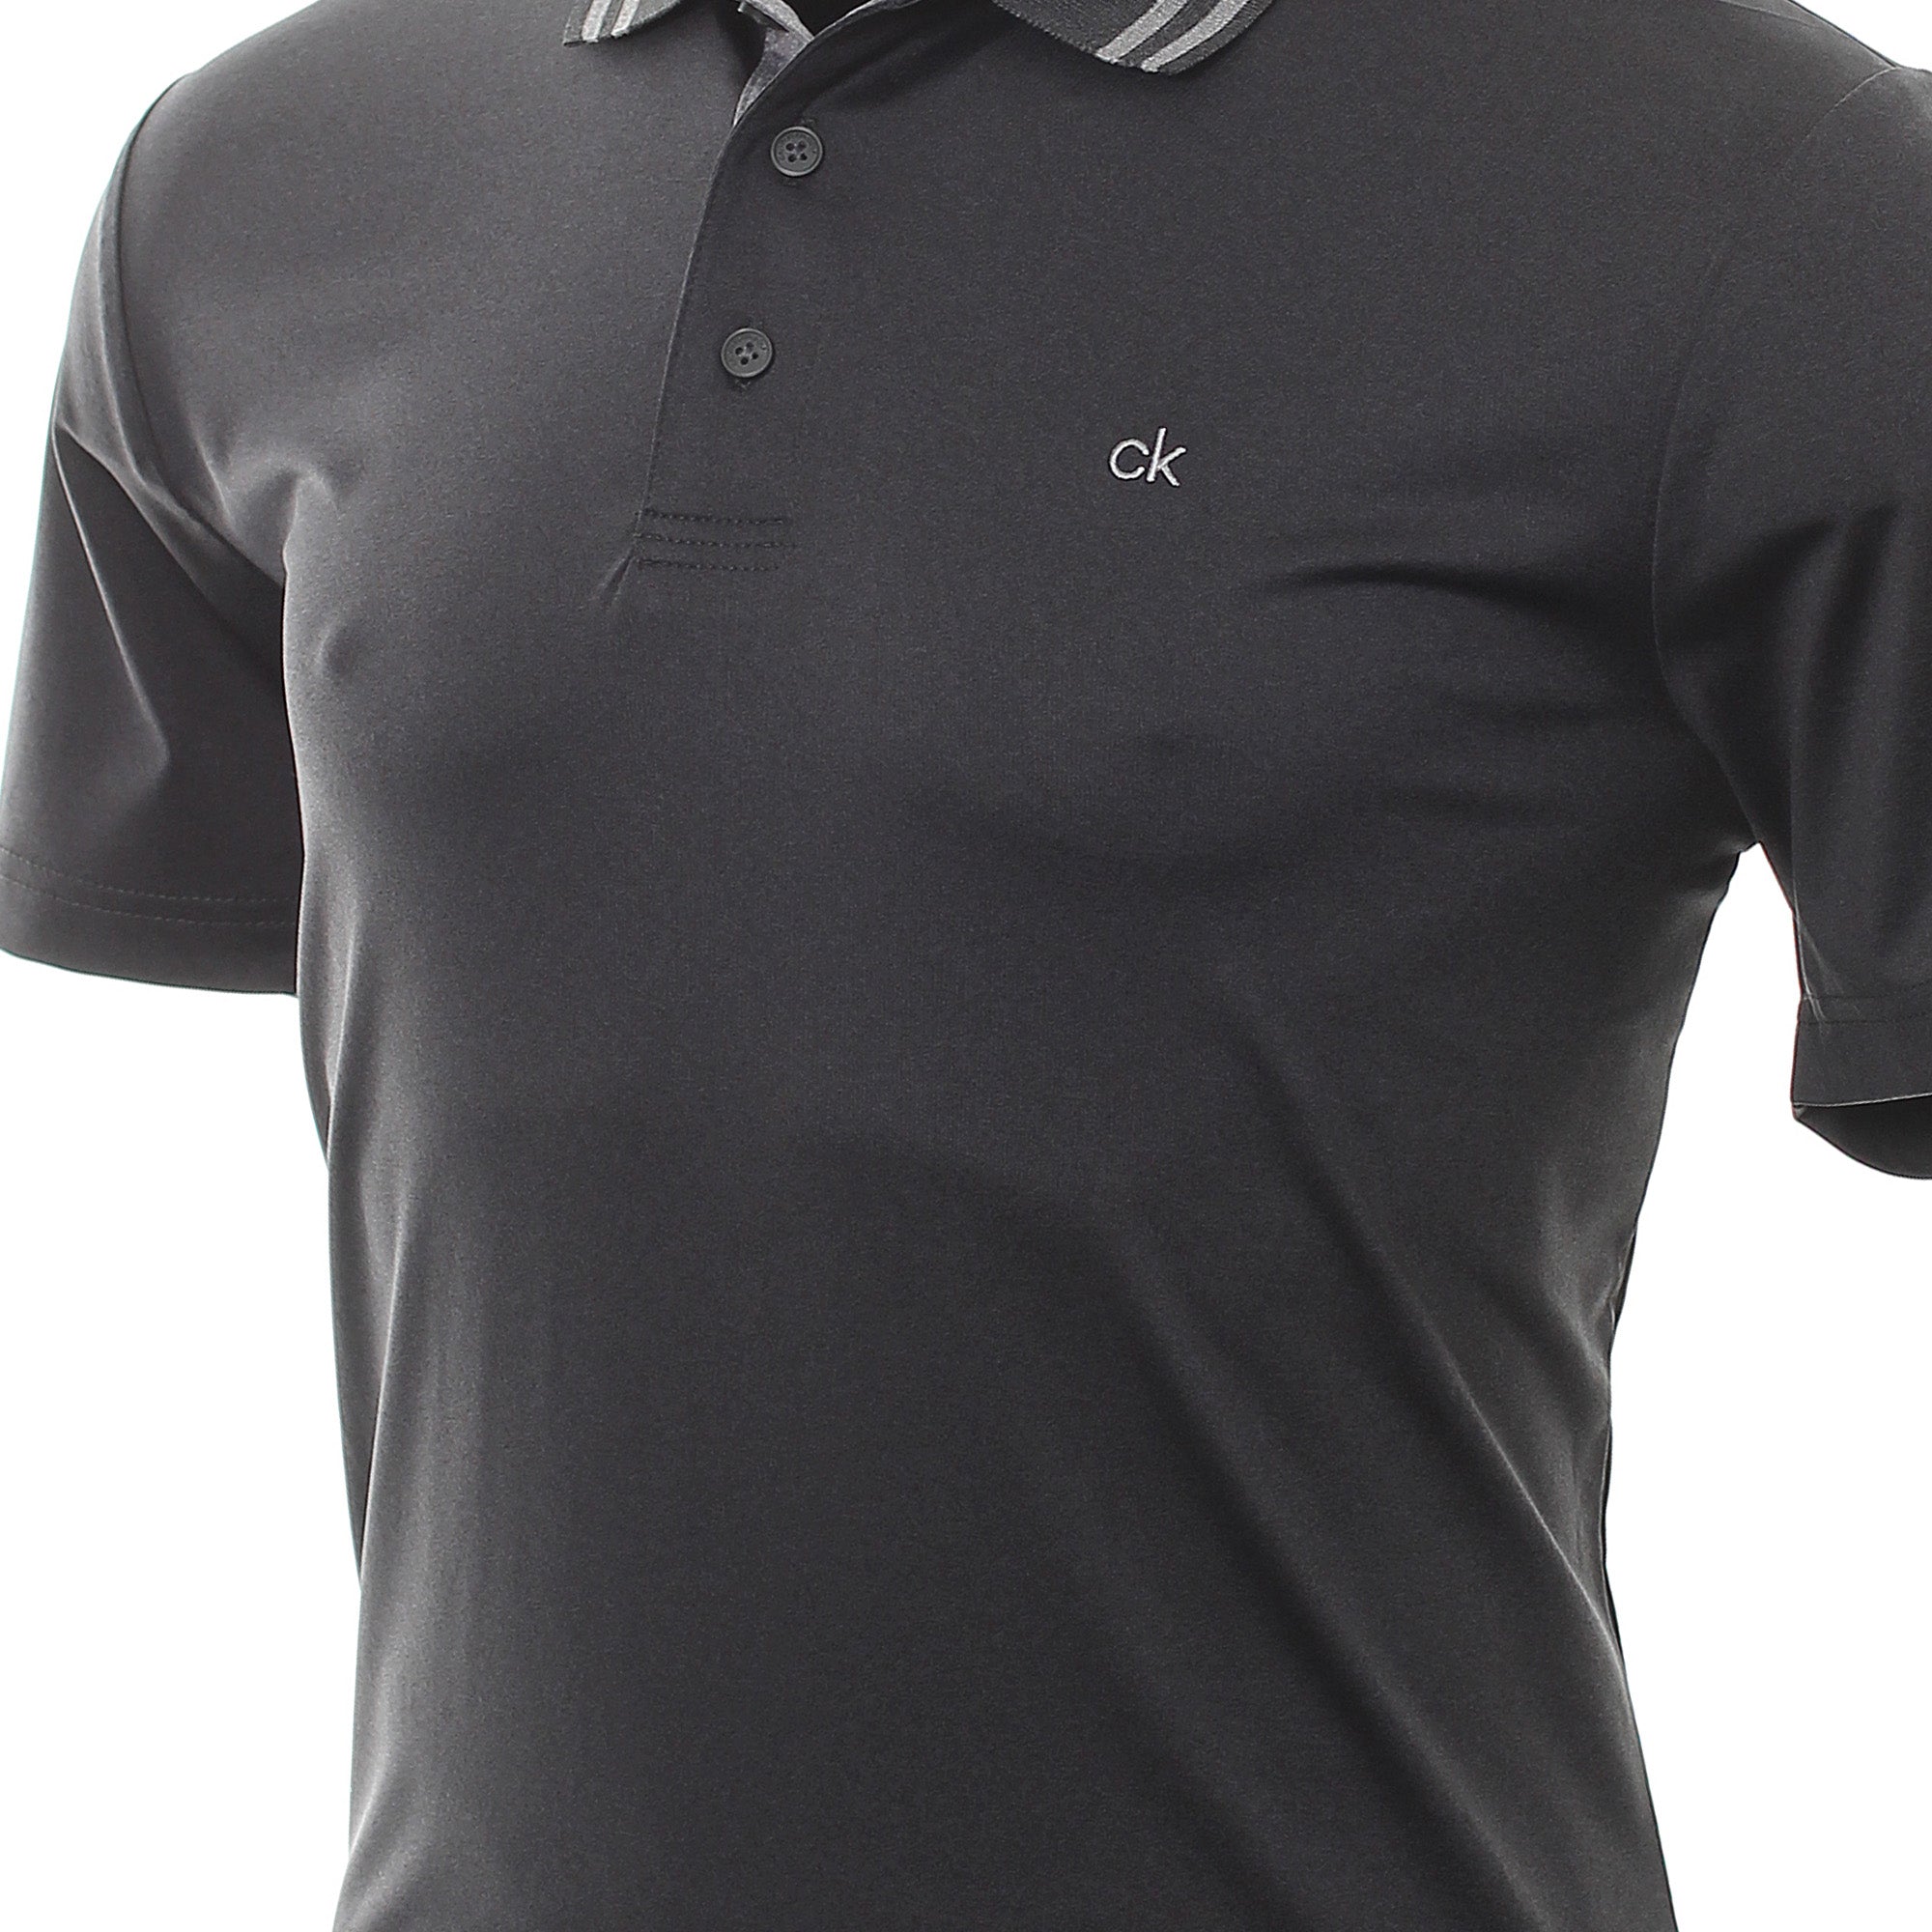 calvin-klein-golf-madison-shirt-c9306-charcoal